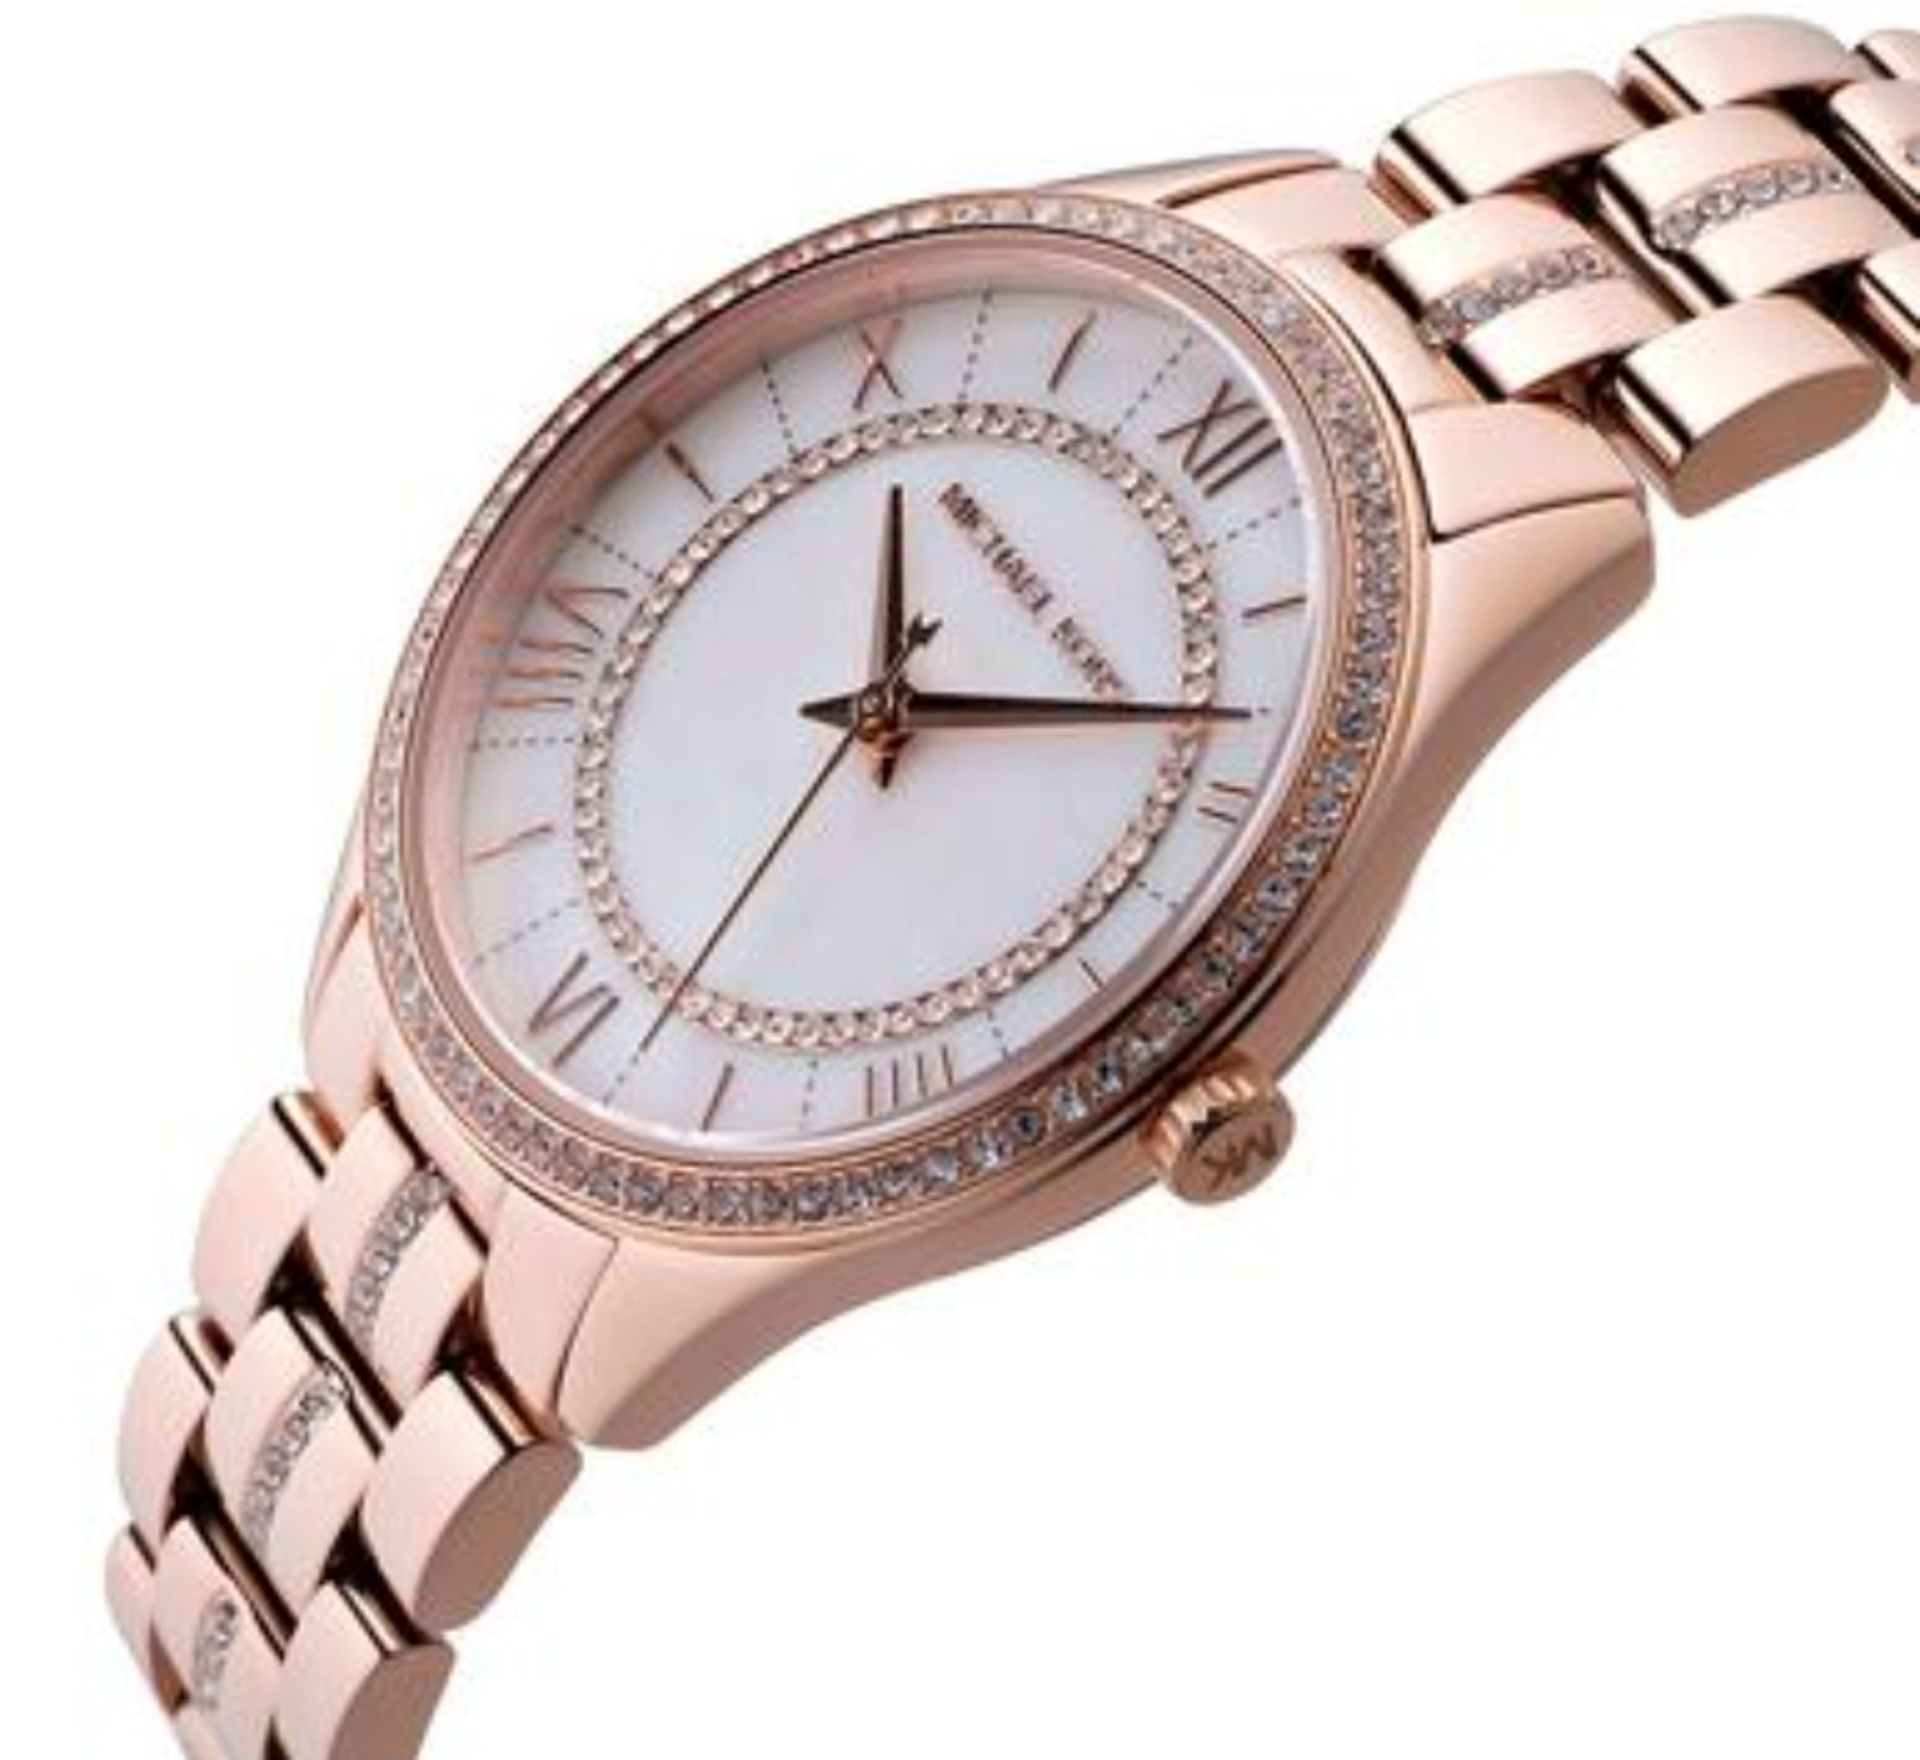 Michael Kors MK3716 Ladies Lauryn Quartz Watch - Image 4 of 6